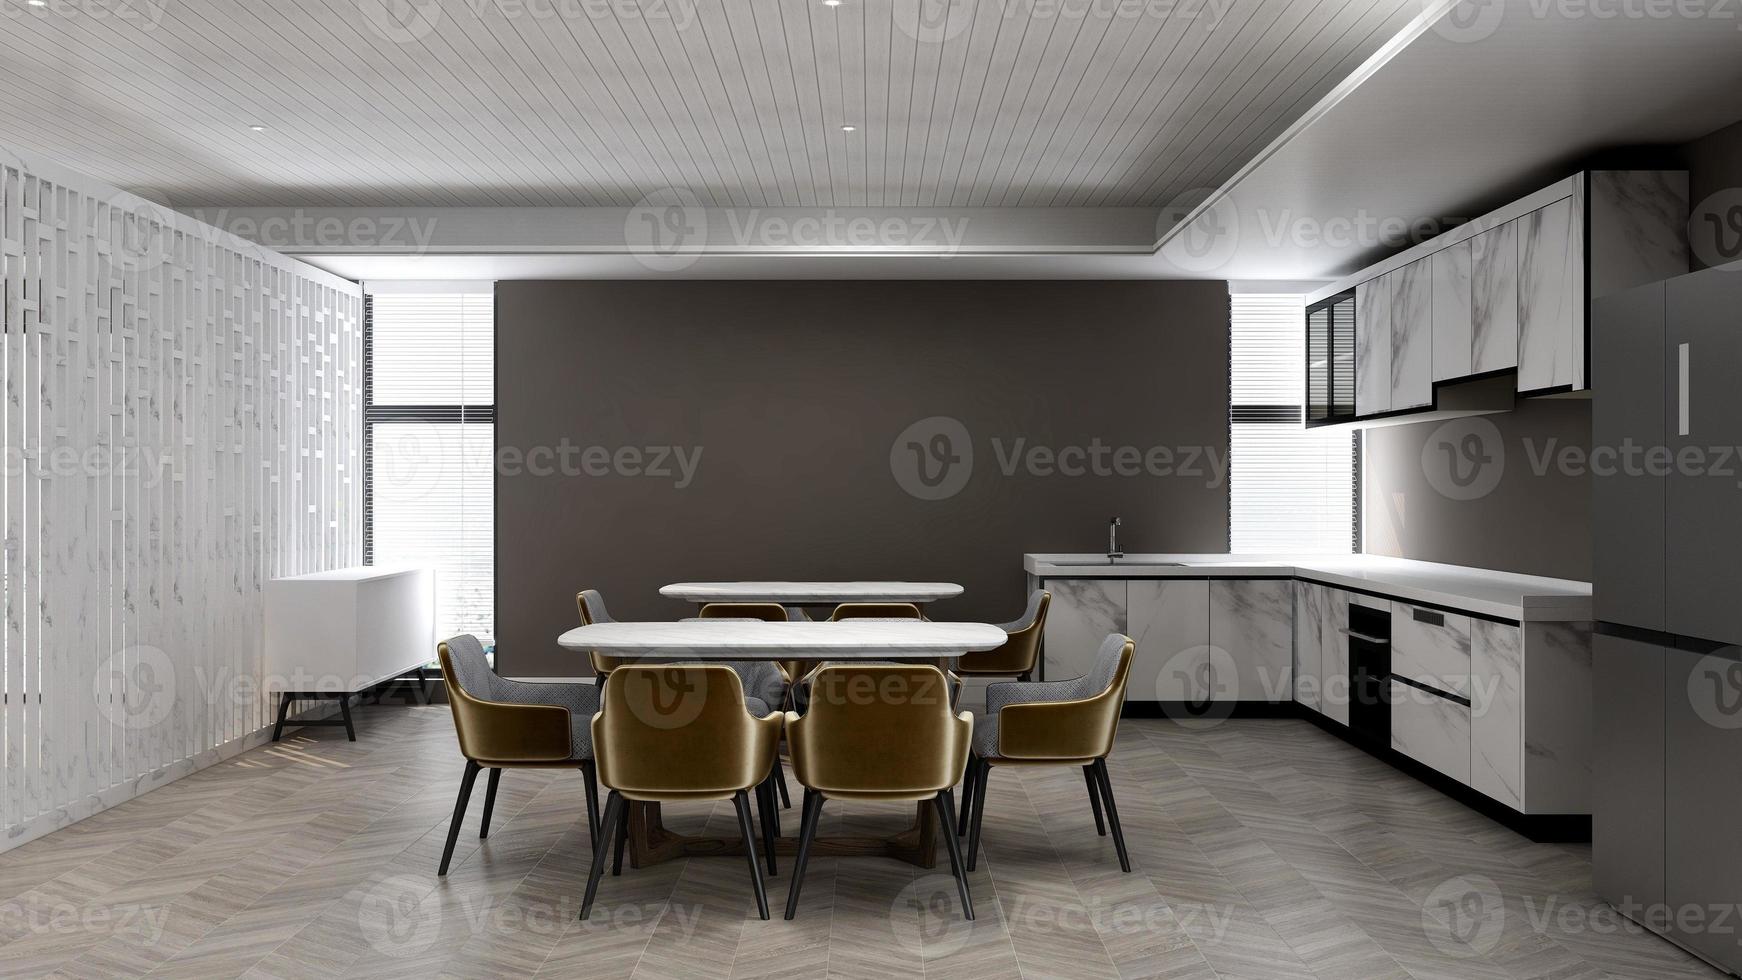 Rendu 3d du garde-manger de bureau moderne - concept de cuisine minimaliste de design d'intérieur photo